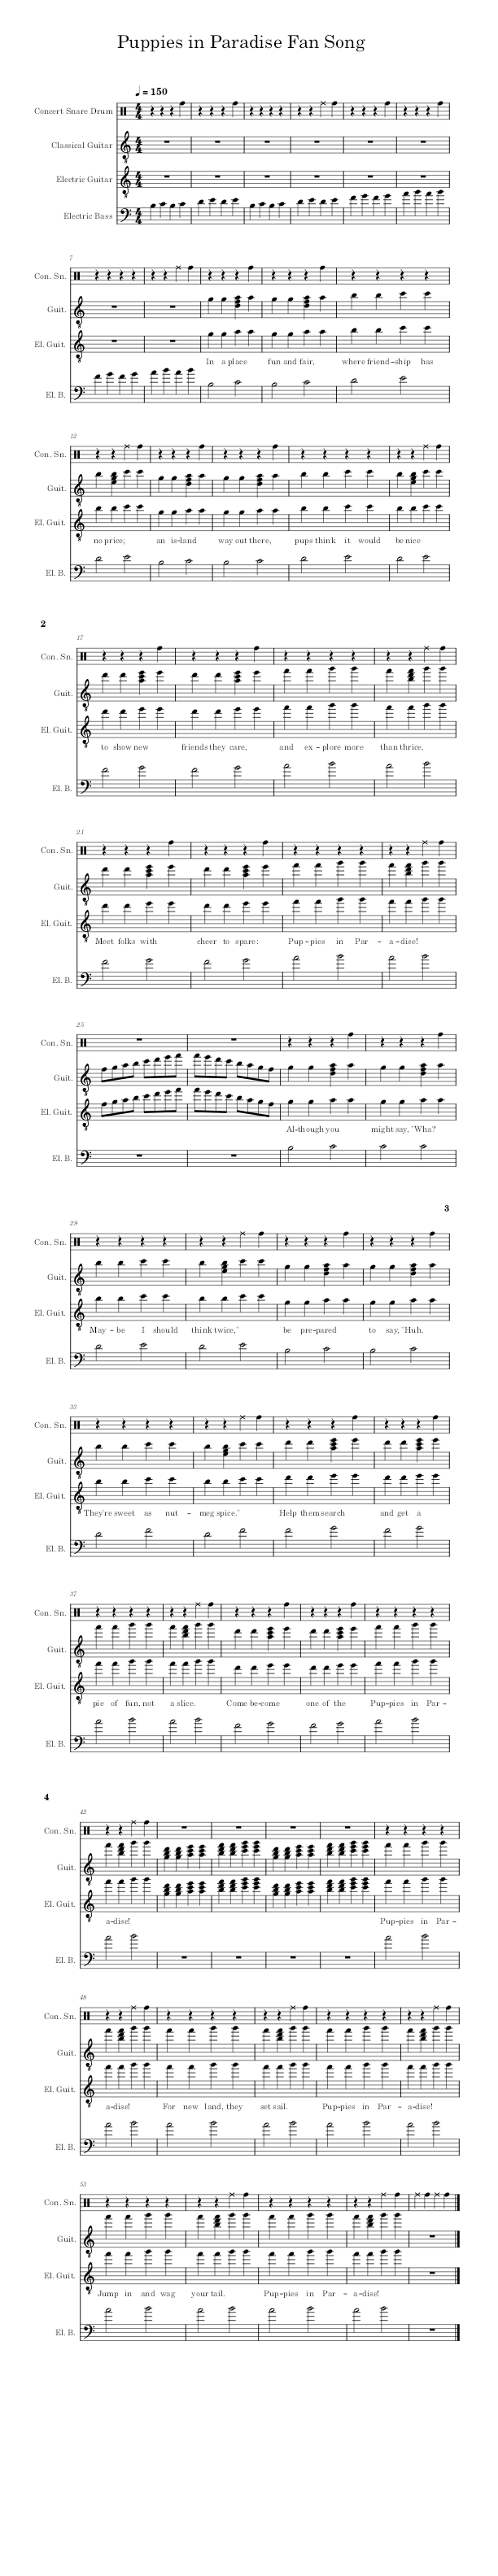 Brainzy Alphabet Lore Theme Song 1941 by Extranimals on DeviantArt